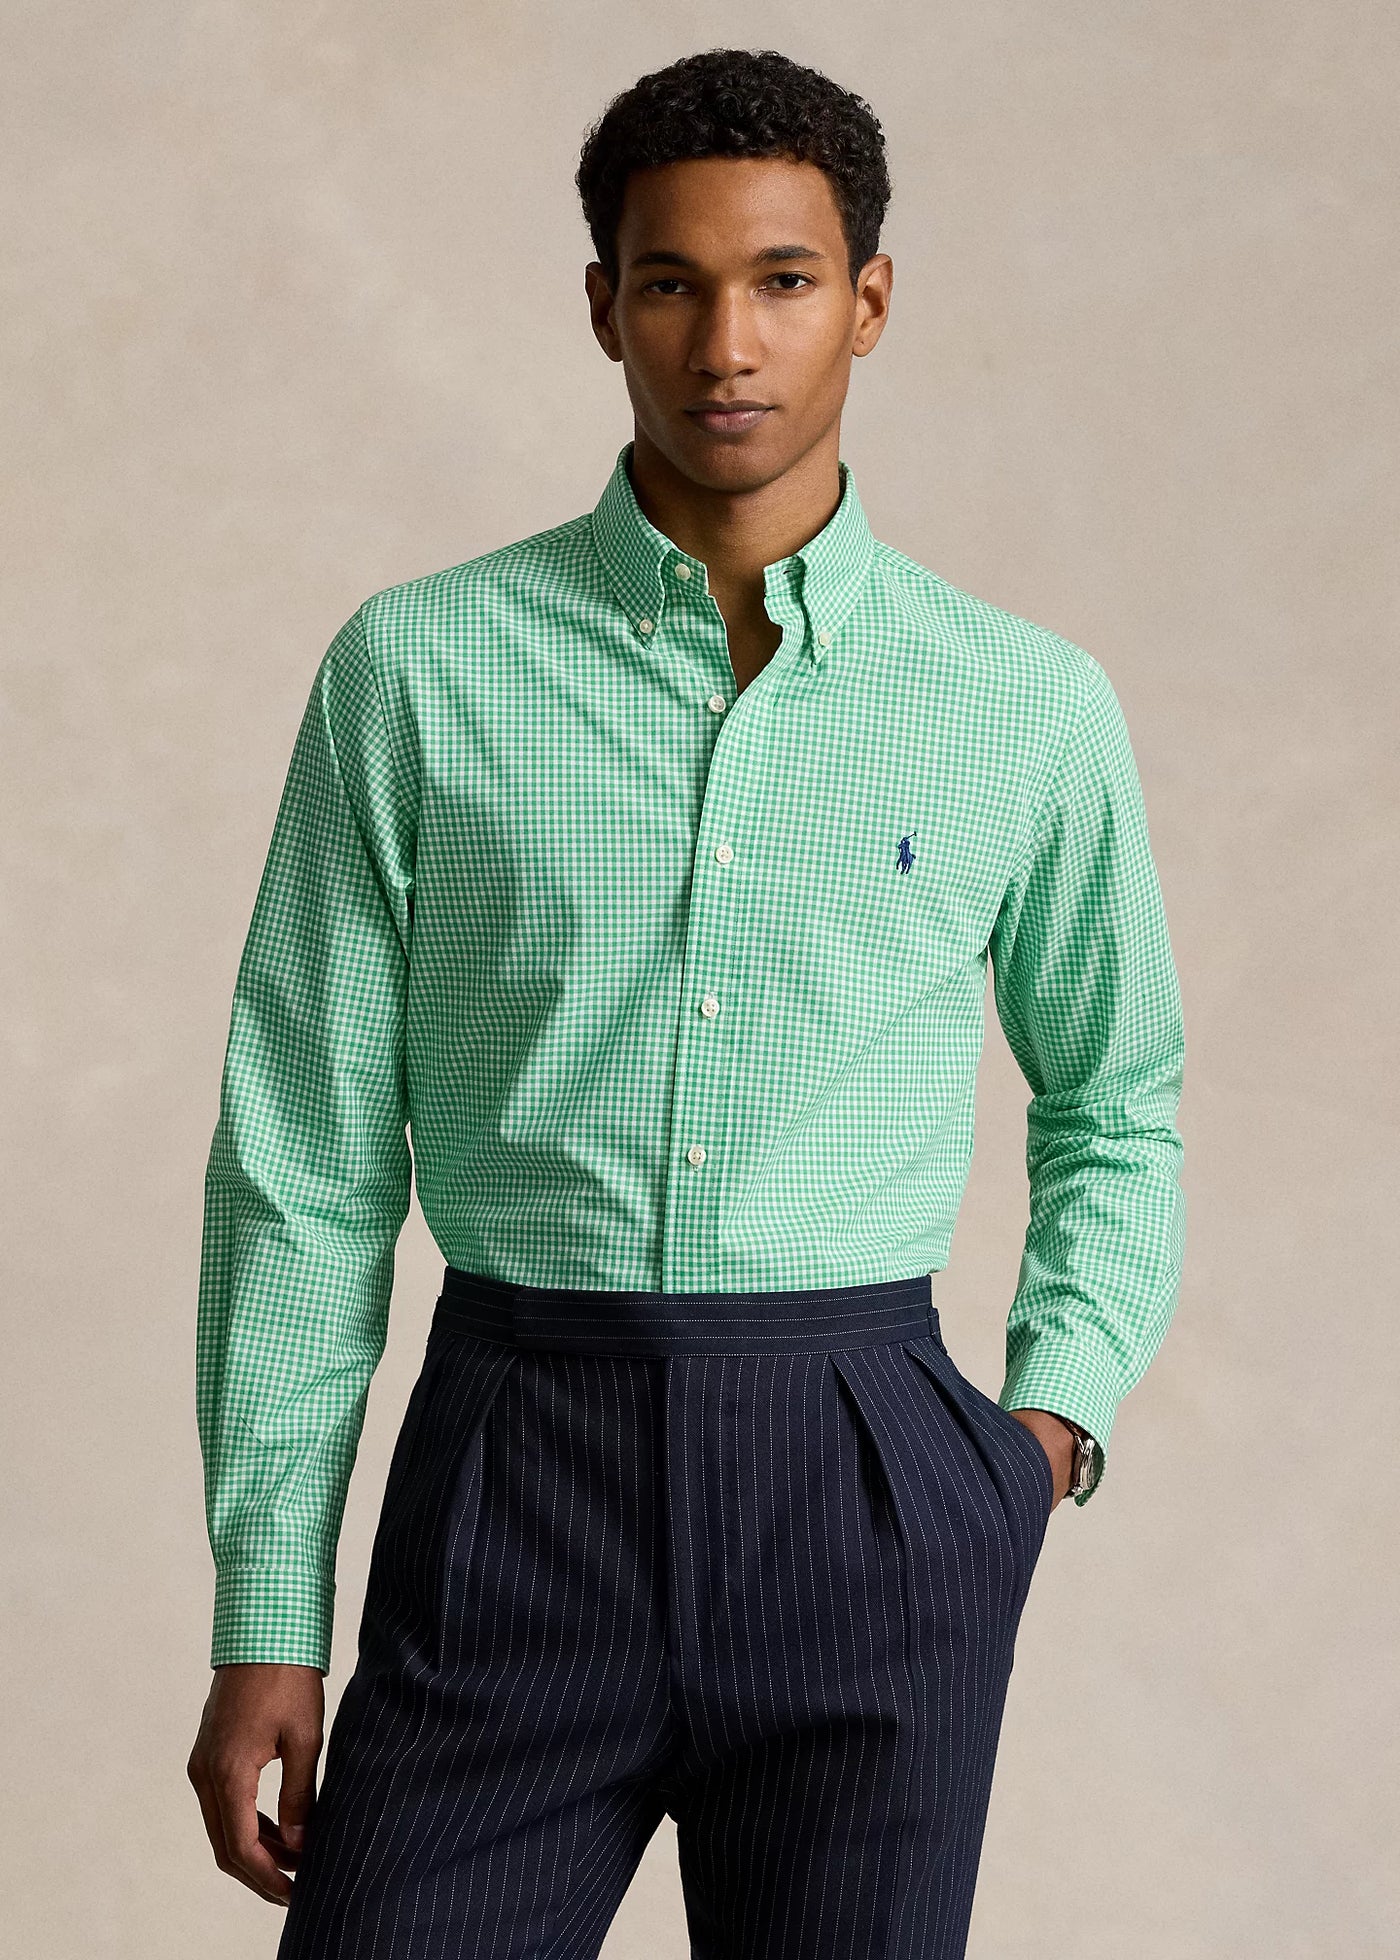 Ralph Lauren Custom Fit Gingham Stretch Poplin Shirt | Emerald/White